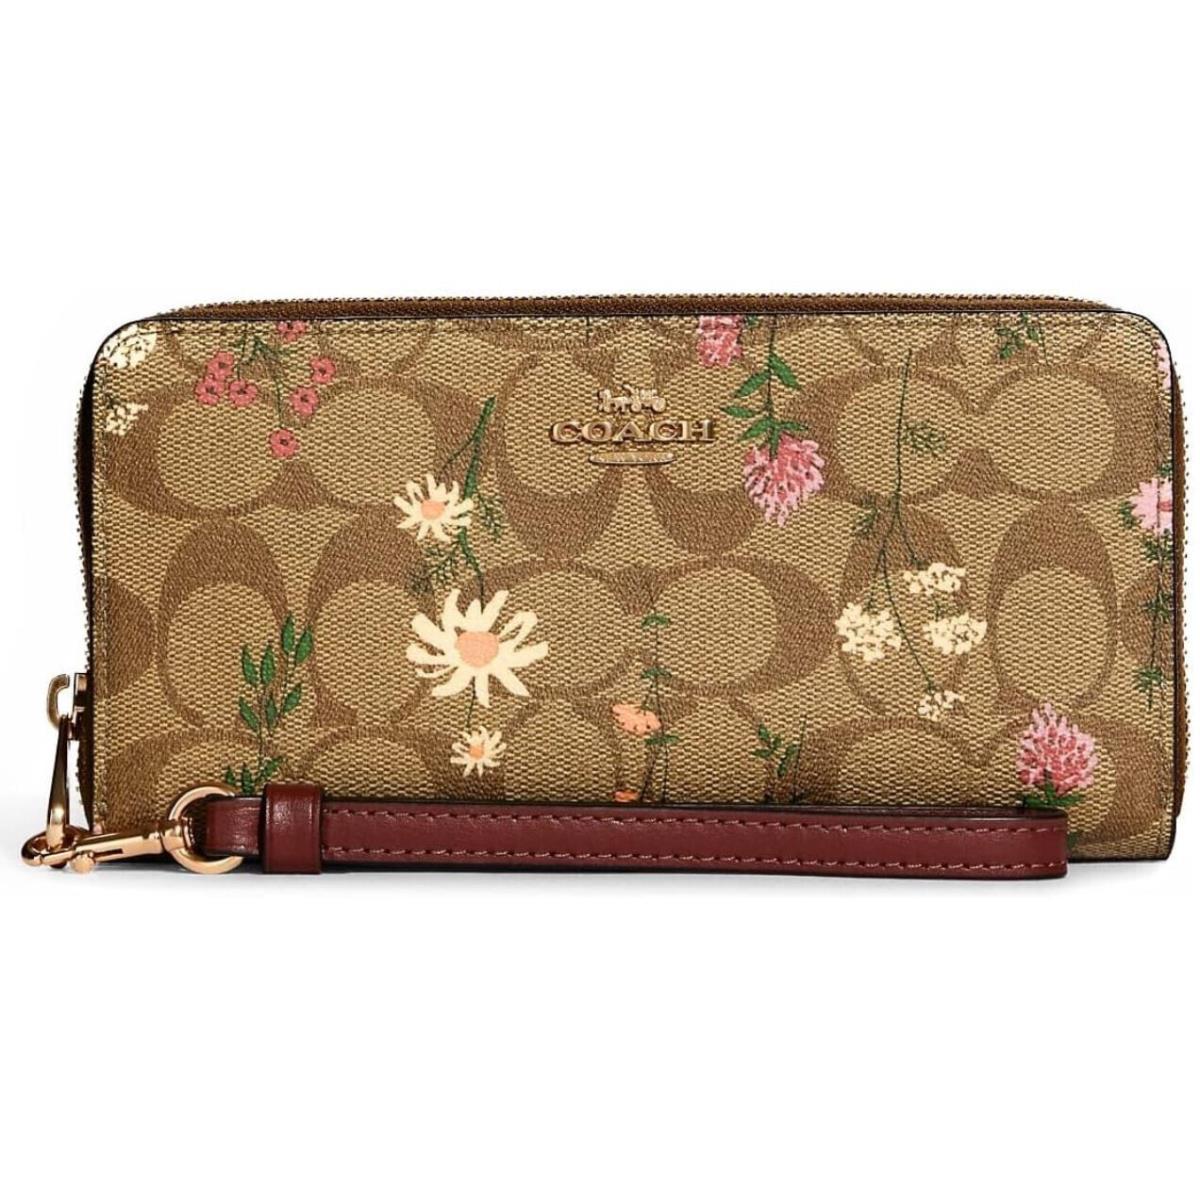 Coach Coated Canvas Signature Wildflower Long Zip Around Wallet Khaki Multi C8736 - Handle/Strap: Brown, Hardware: Gold, Exterior: